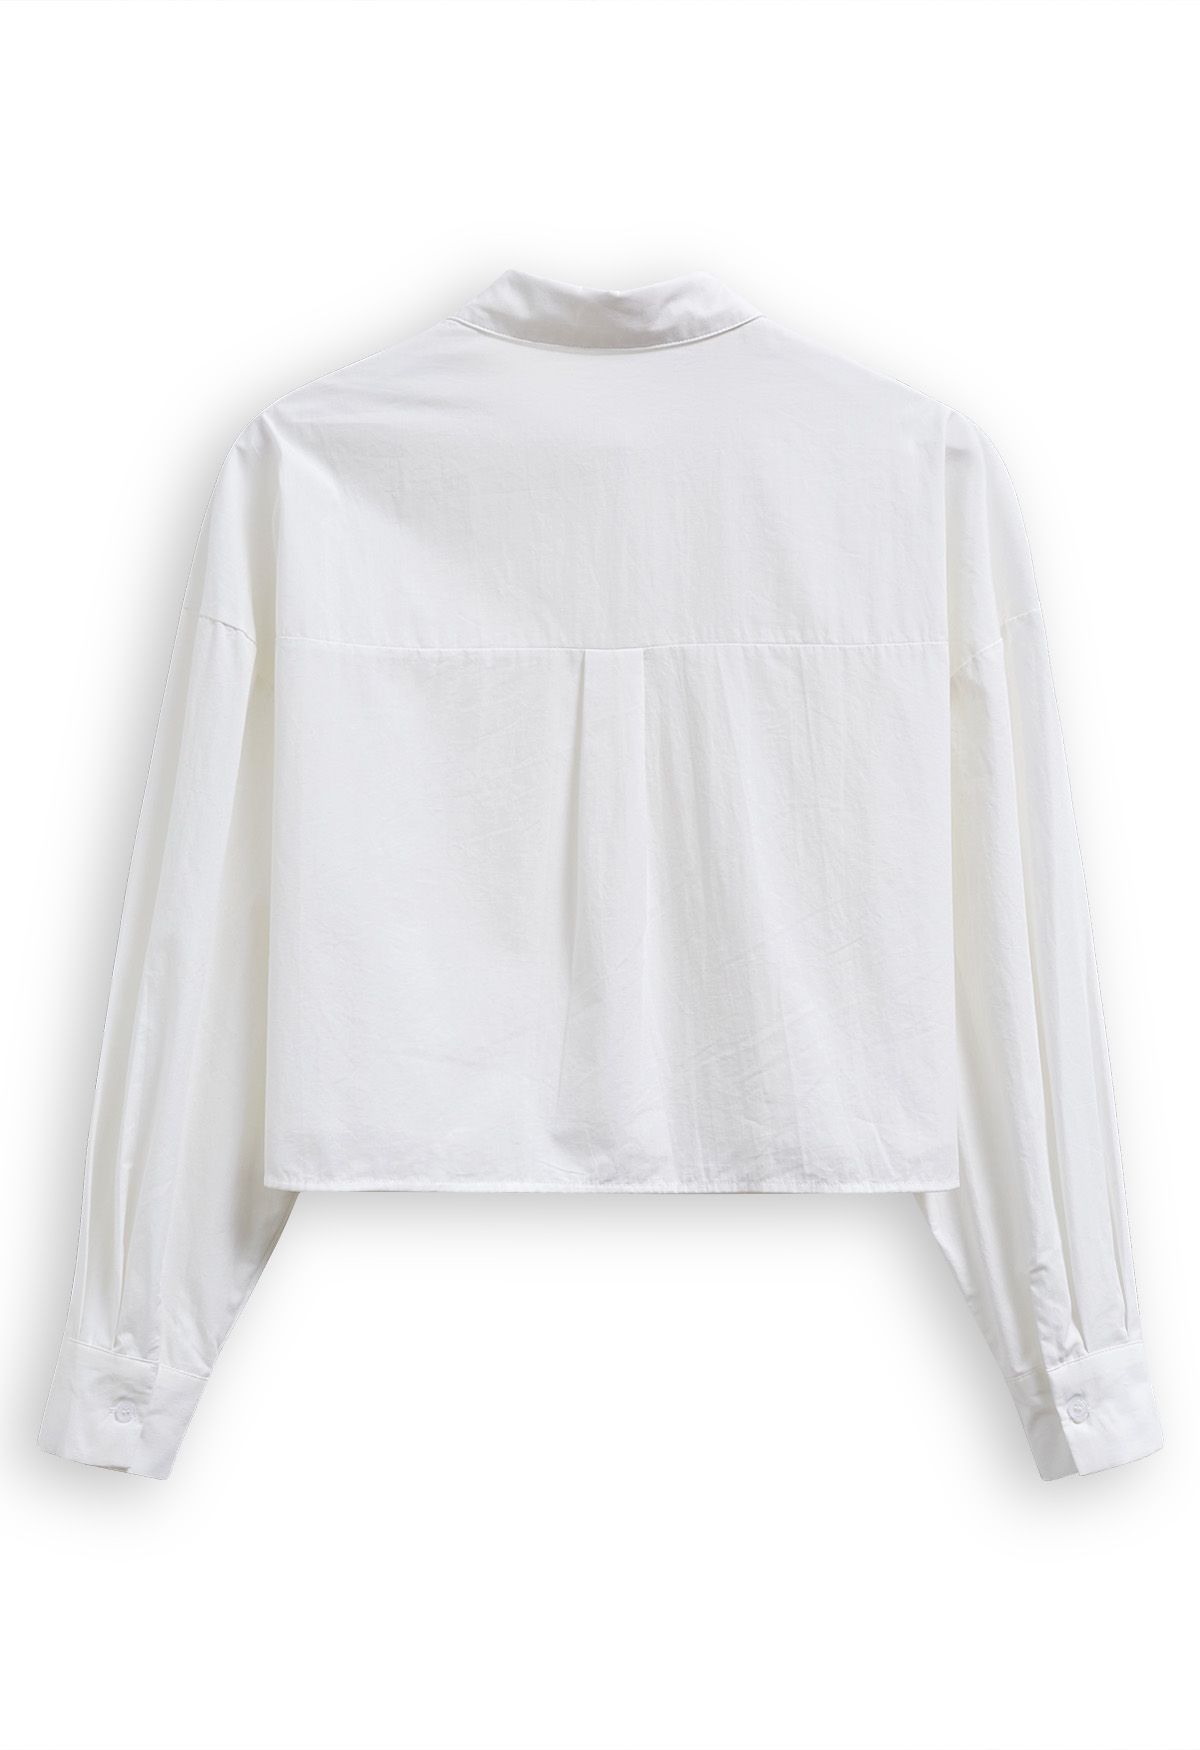 Chic Button Down Crop Shirt in White